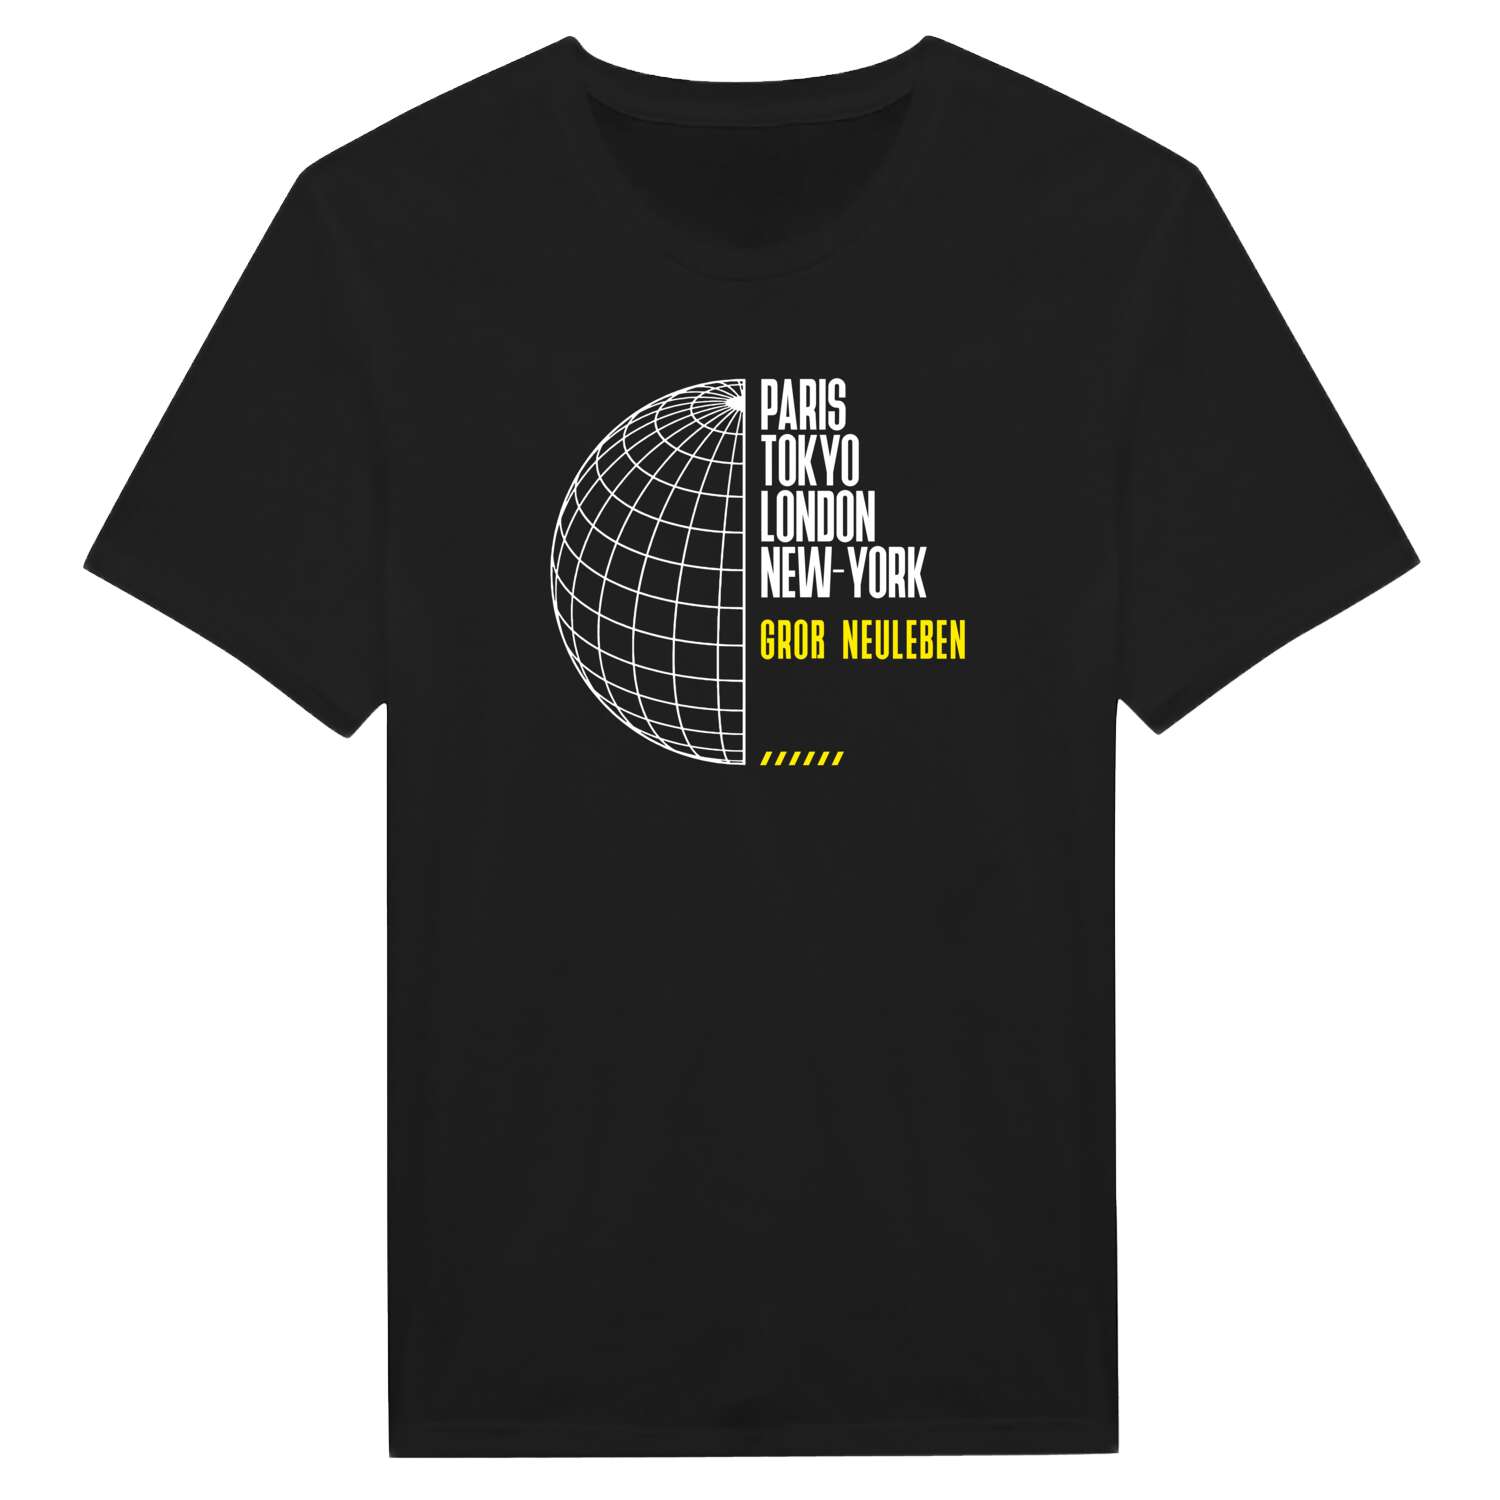 Groß Neuleben T-Shirt »Paris Tokyo London«